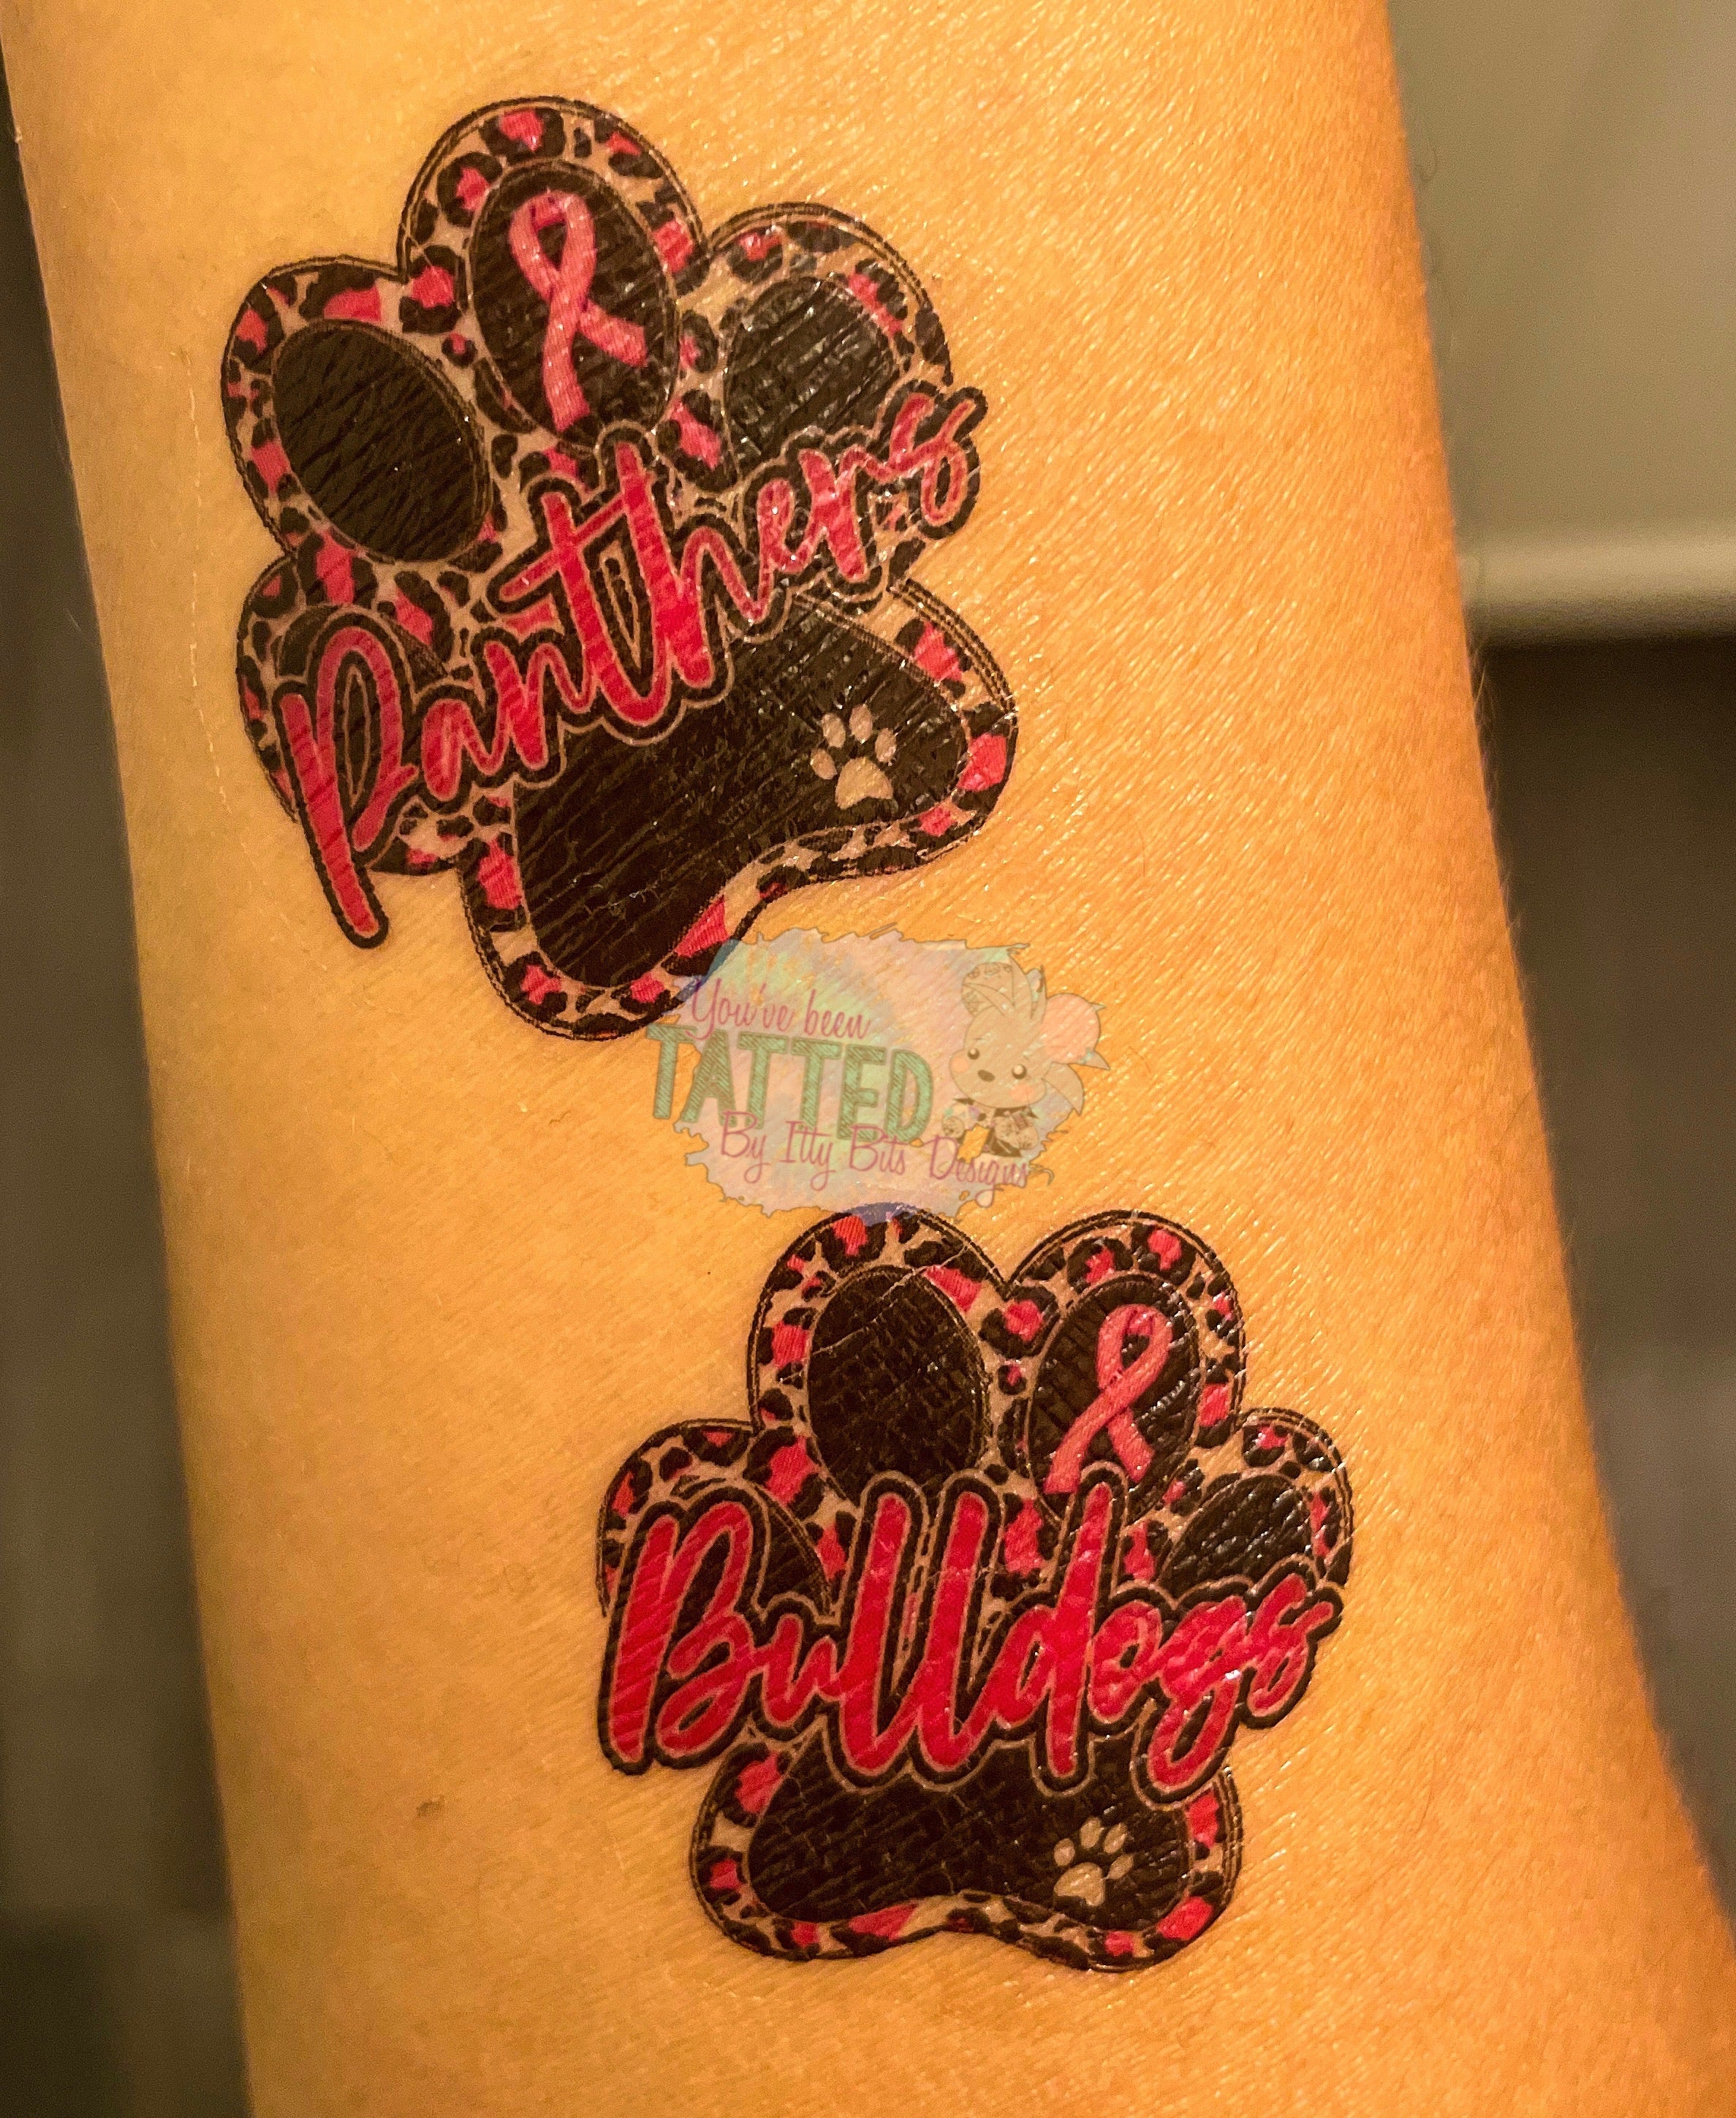 Darkside Tattoo on Tumblr: Miami Hurricanes Mascot #miami #hurricanes  #miamihurricanes #football #mascot #team #logo #wip #inprogress #morerocome  #tattoo...